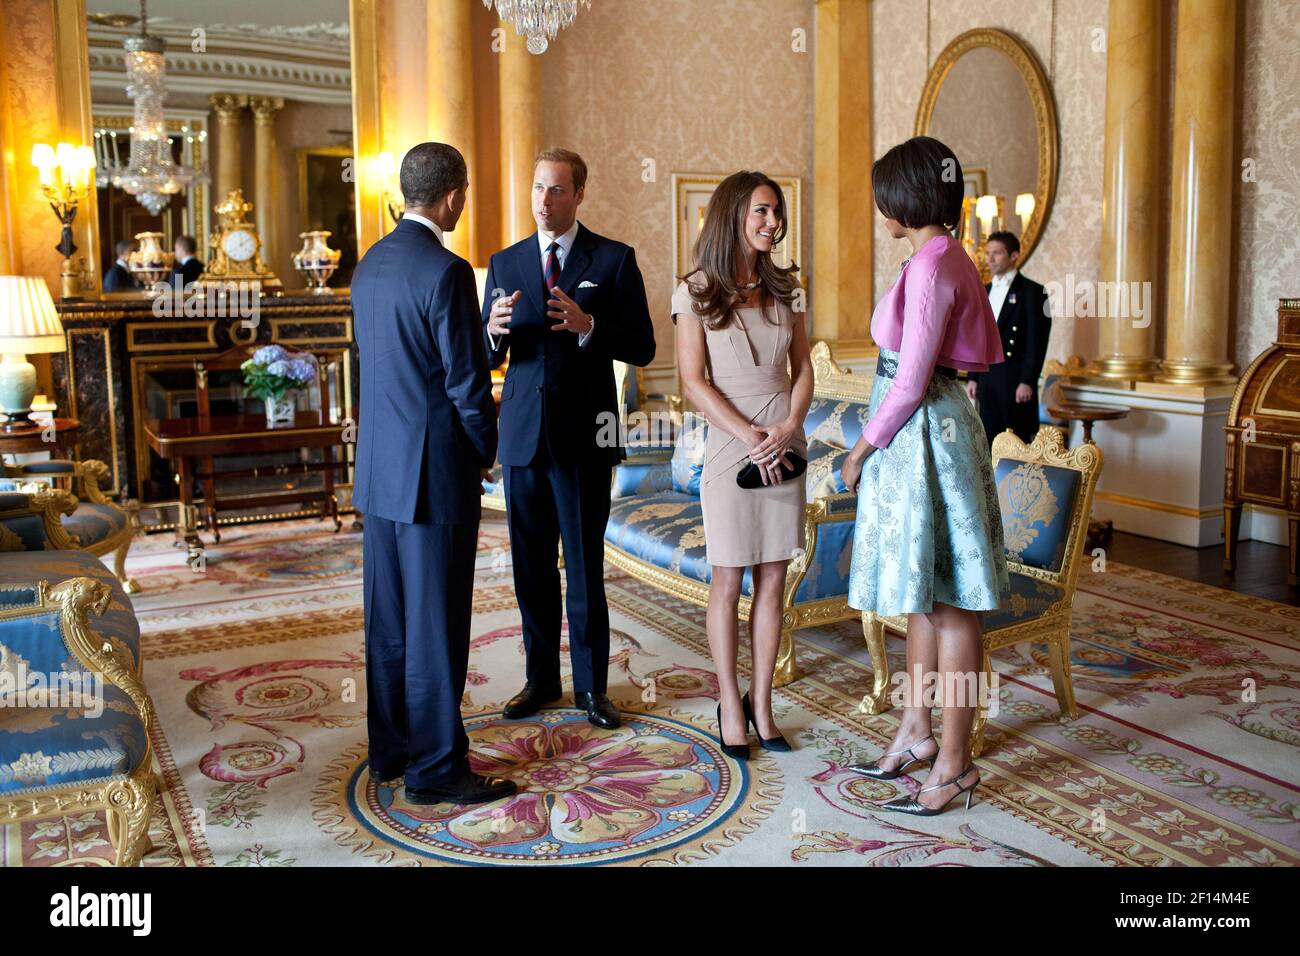 Präsident Barack Obama und First Lady Michelle Obama sprechen mit dem Duke and Duchess of Cambridge im 1844 Room des Buckingham Palace in London, England, 24. Mai 2011 Stockfoto